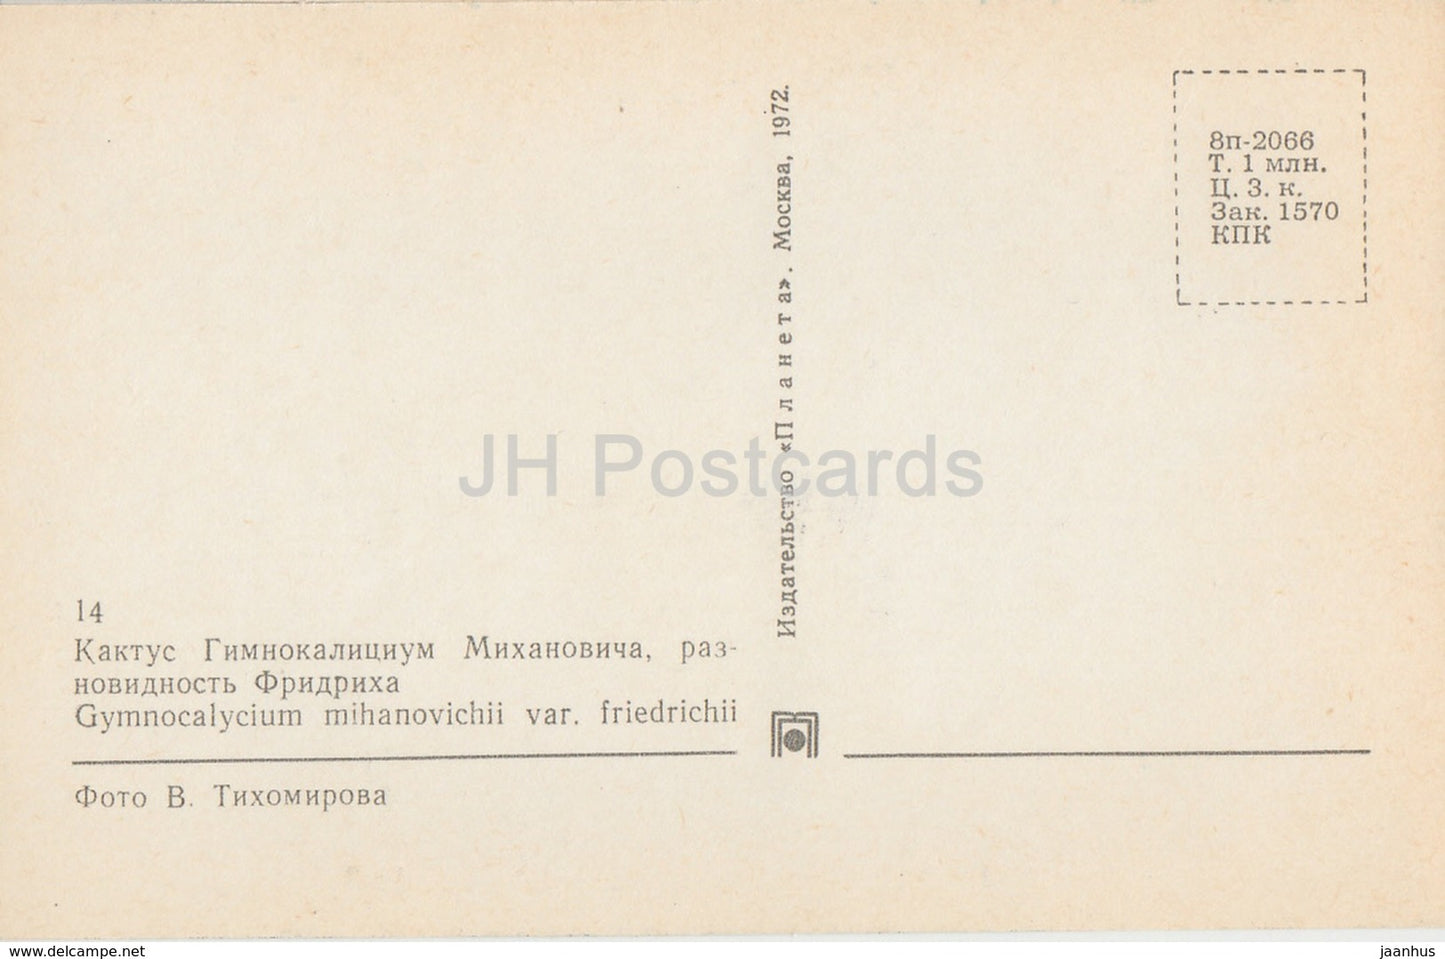 Moon Cactus - Gymnocalycium mihanovichii - 1 - Cactus - Flowers - 1972 - Russia USSR - unused - JH Postcards